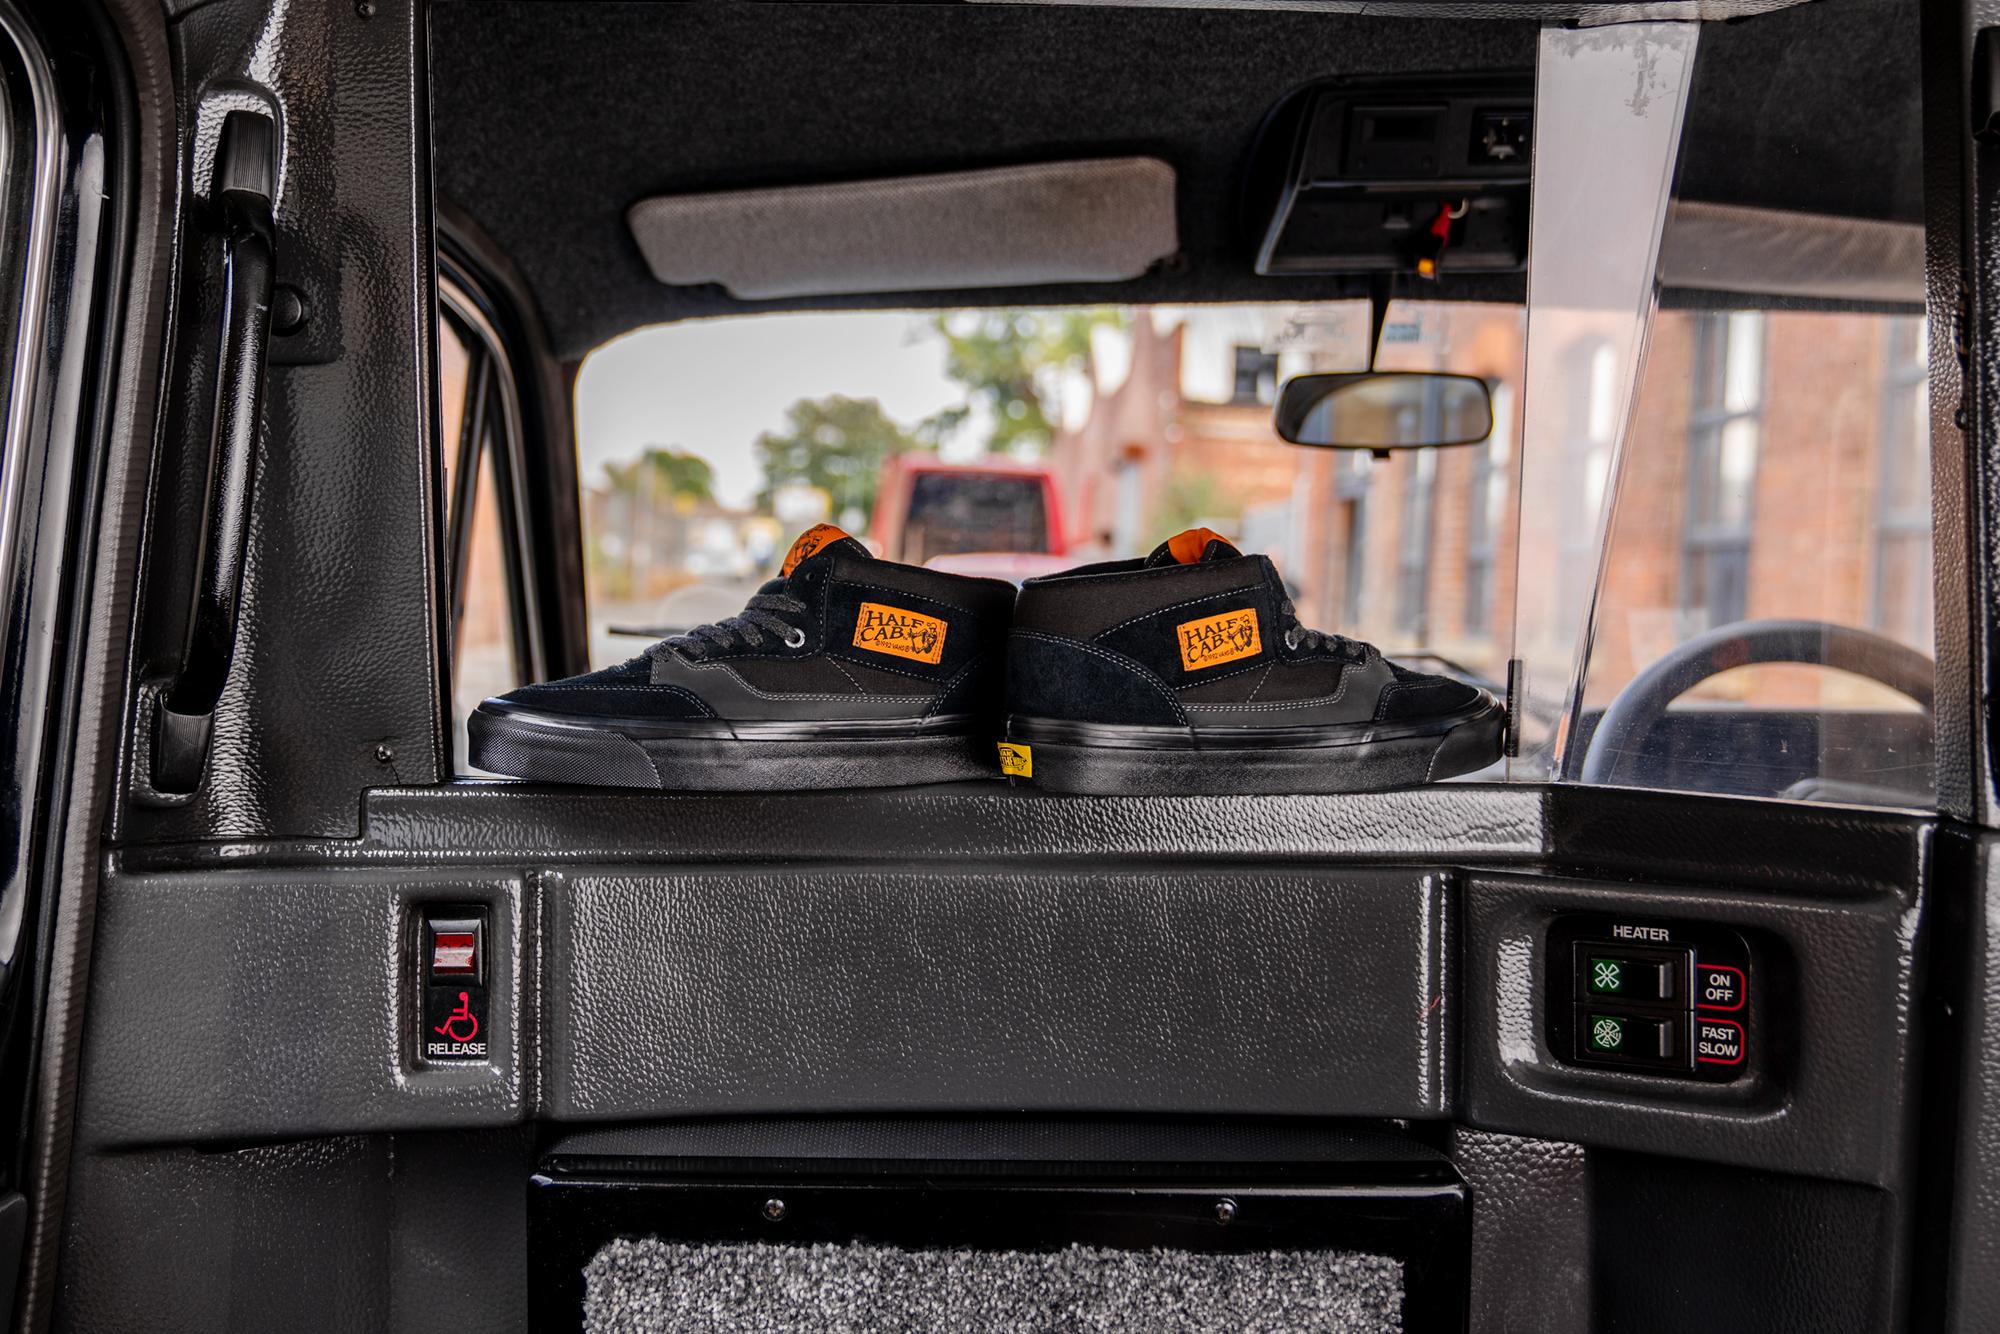 size? x Vans Half Cab ‘Taxi’ pack